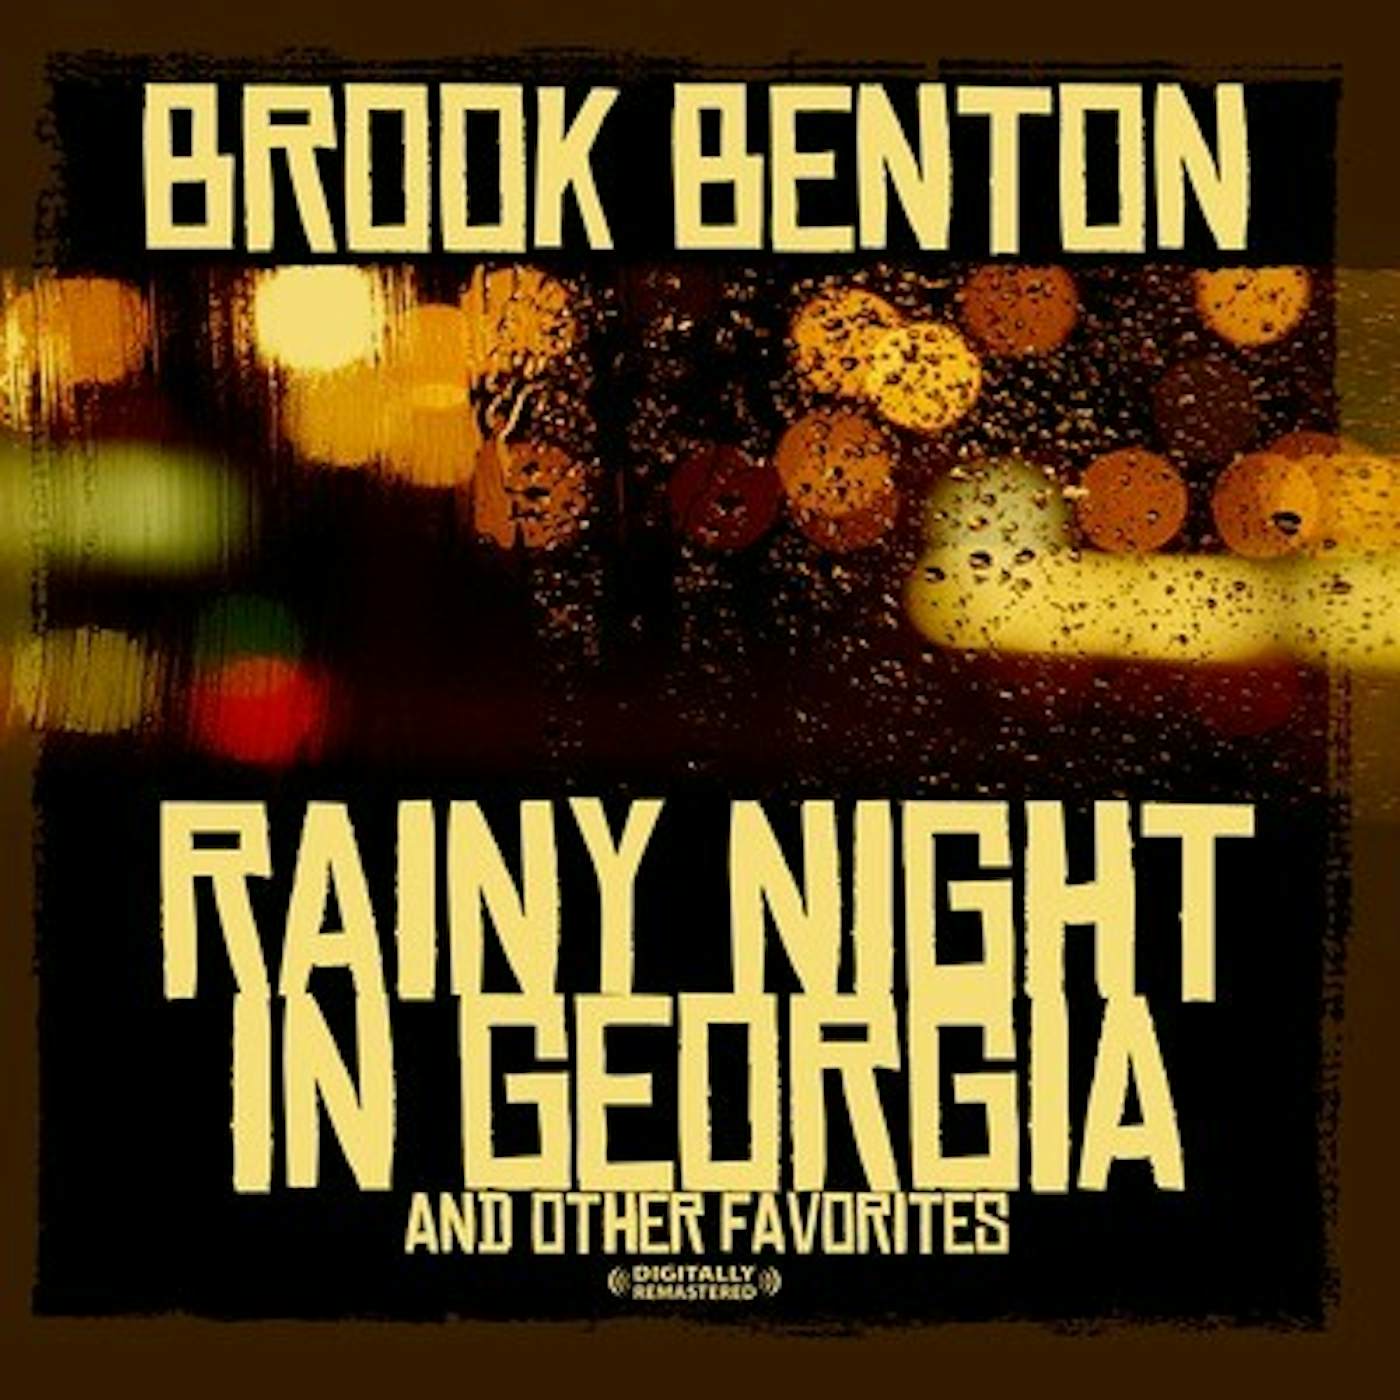 Brook Benton RAINY NIGHT IN GEORGIA & OTHER FAVORITES CD